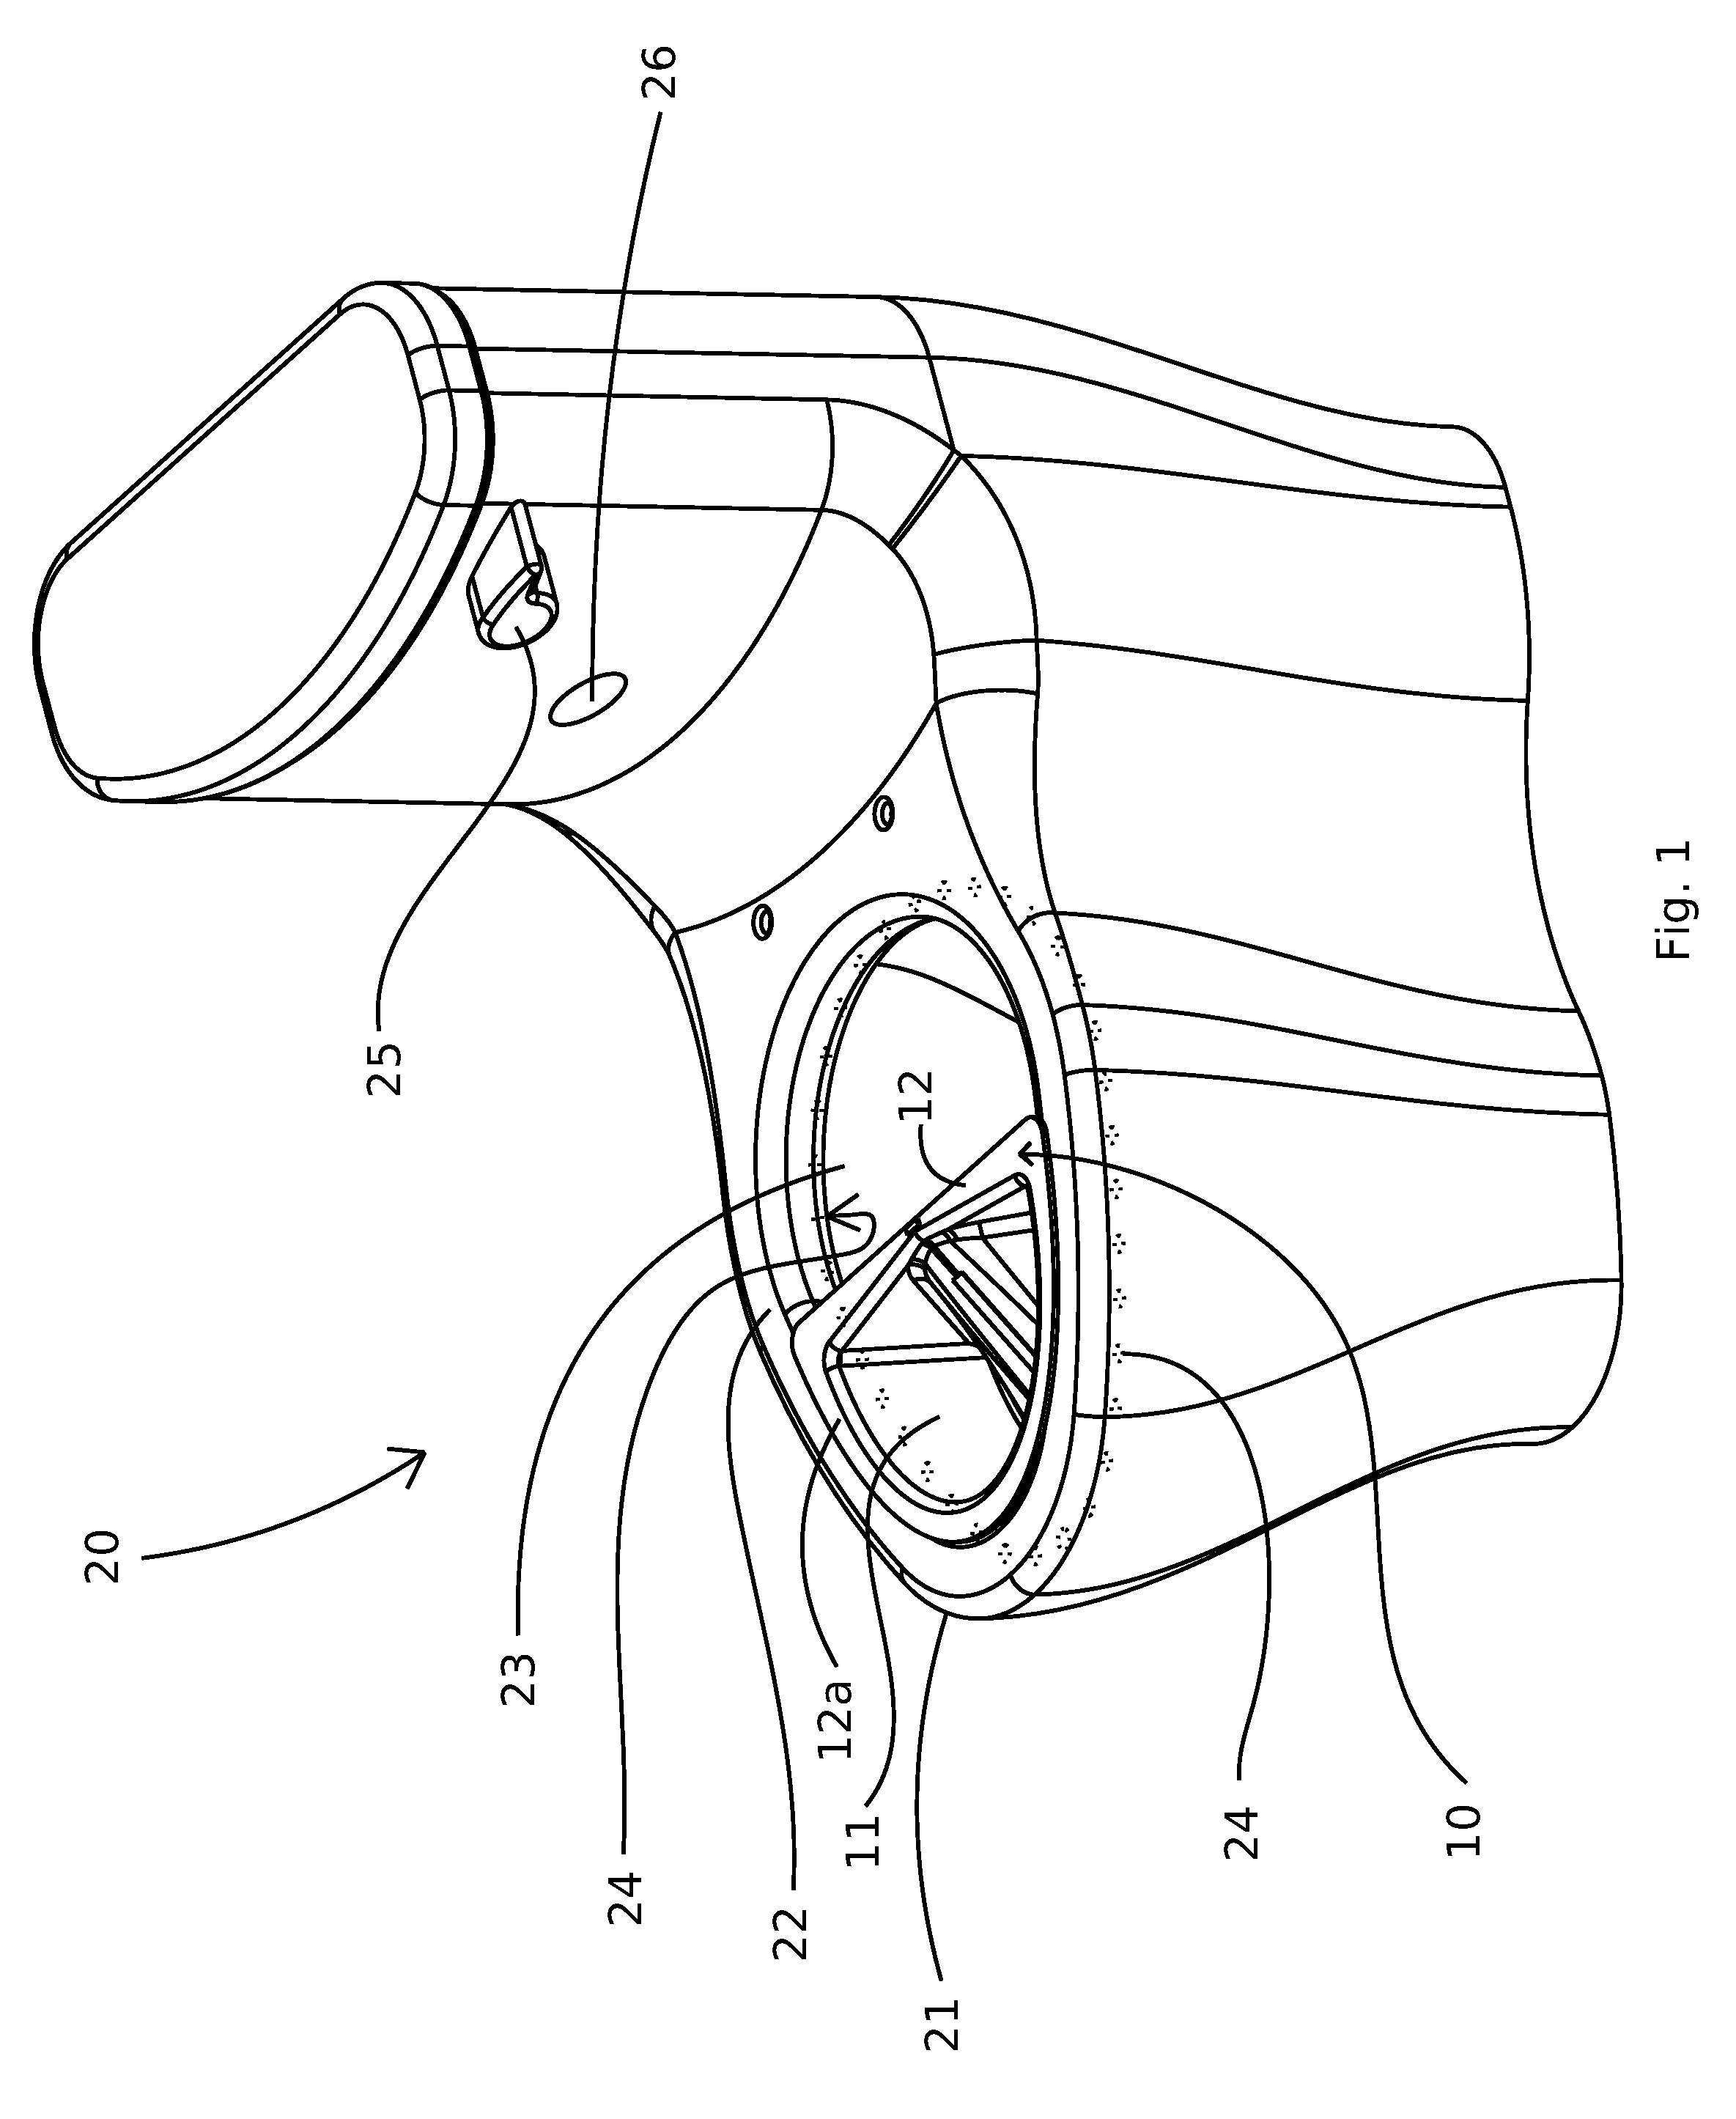 Urine specimen capture and analysis device